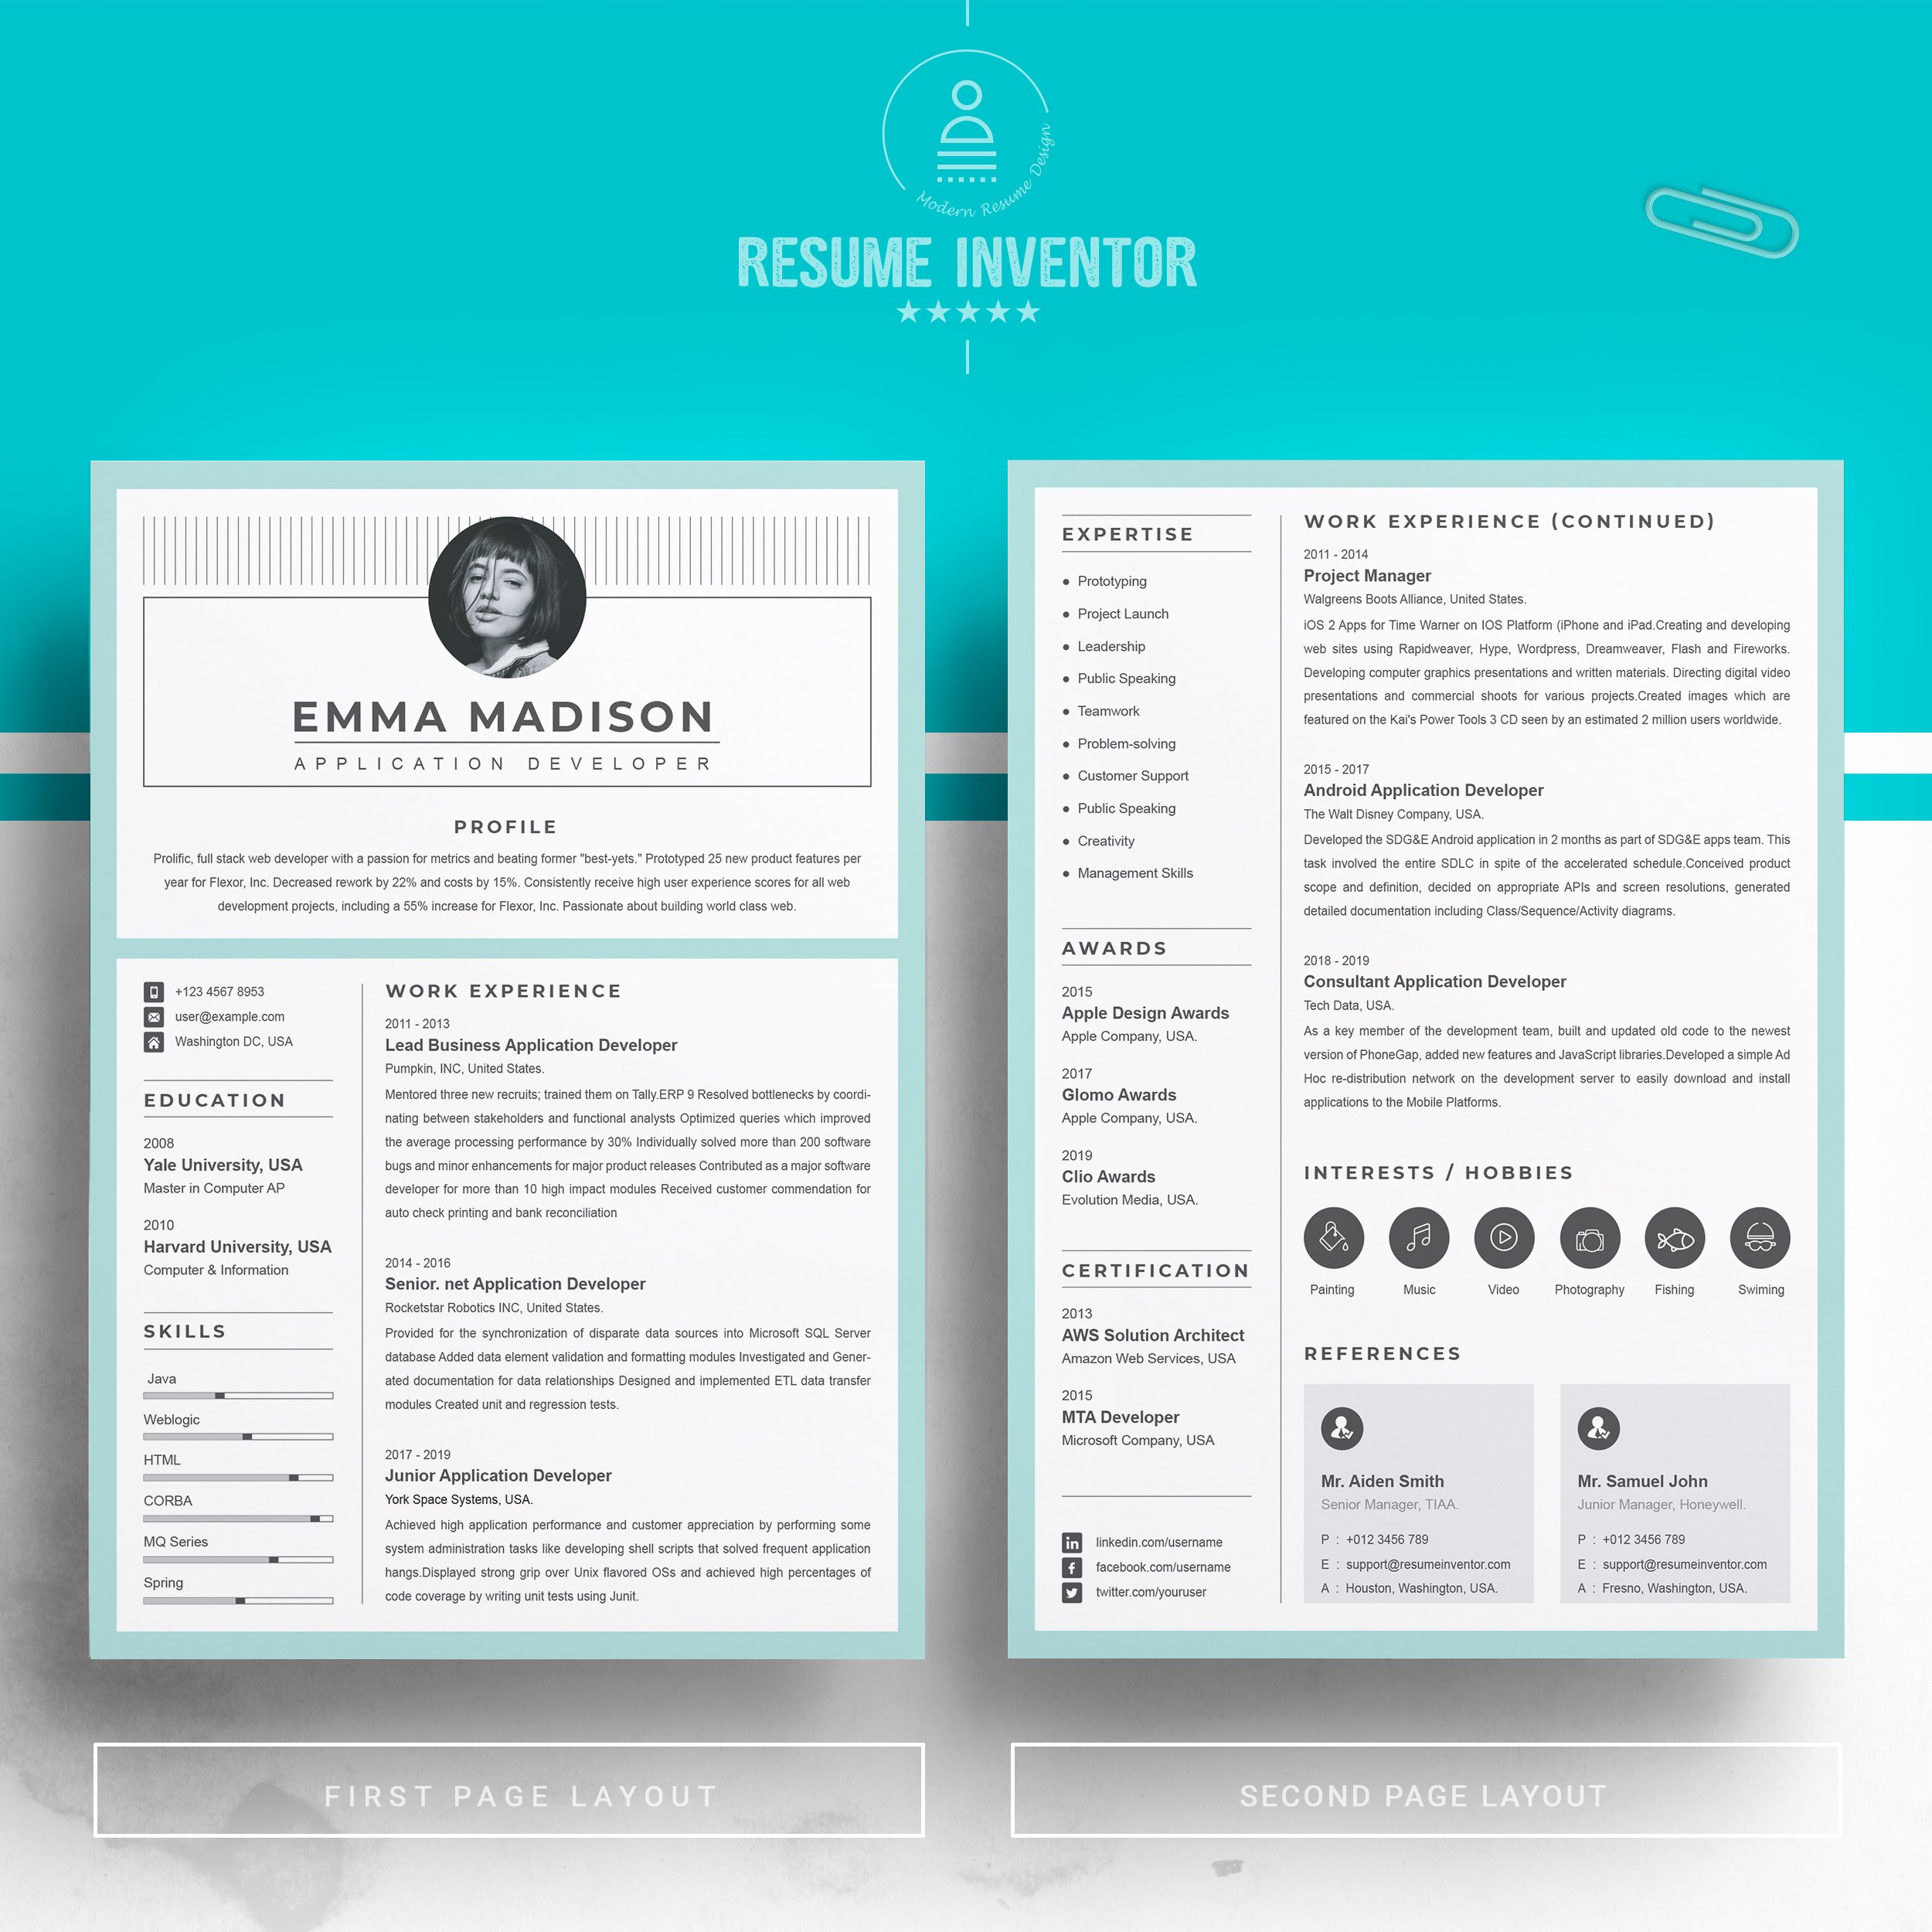 App Developer Resume / CV Template preview image.